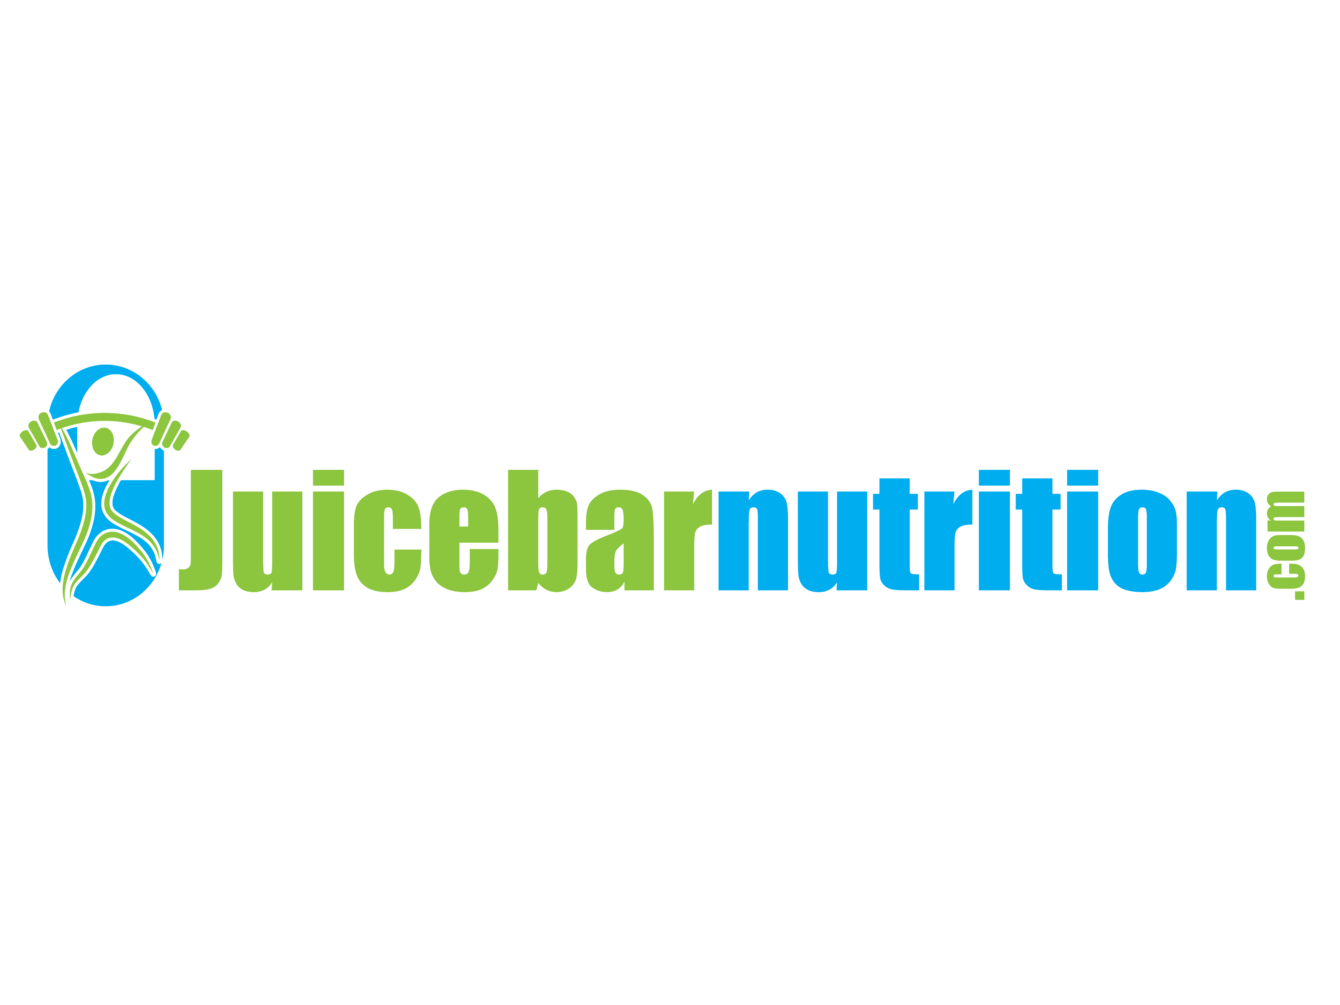 Juice Bar Nutrition